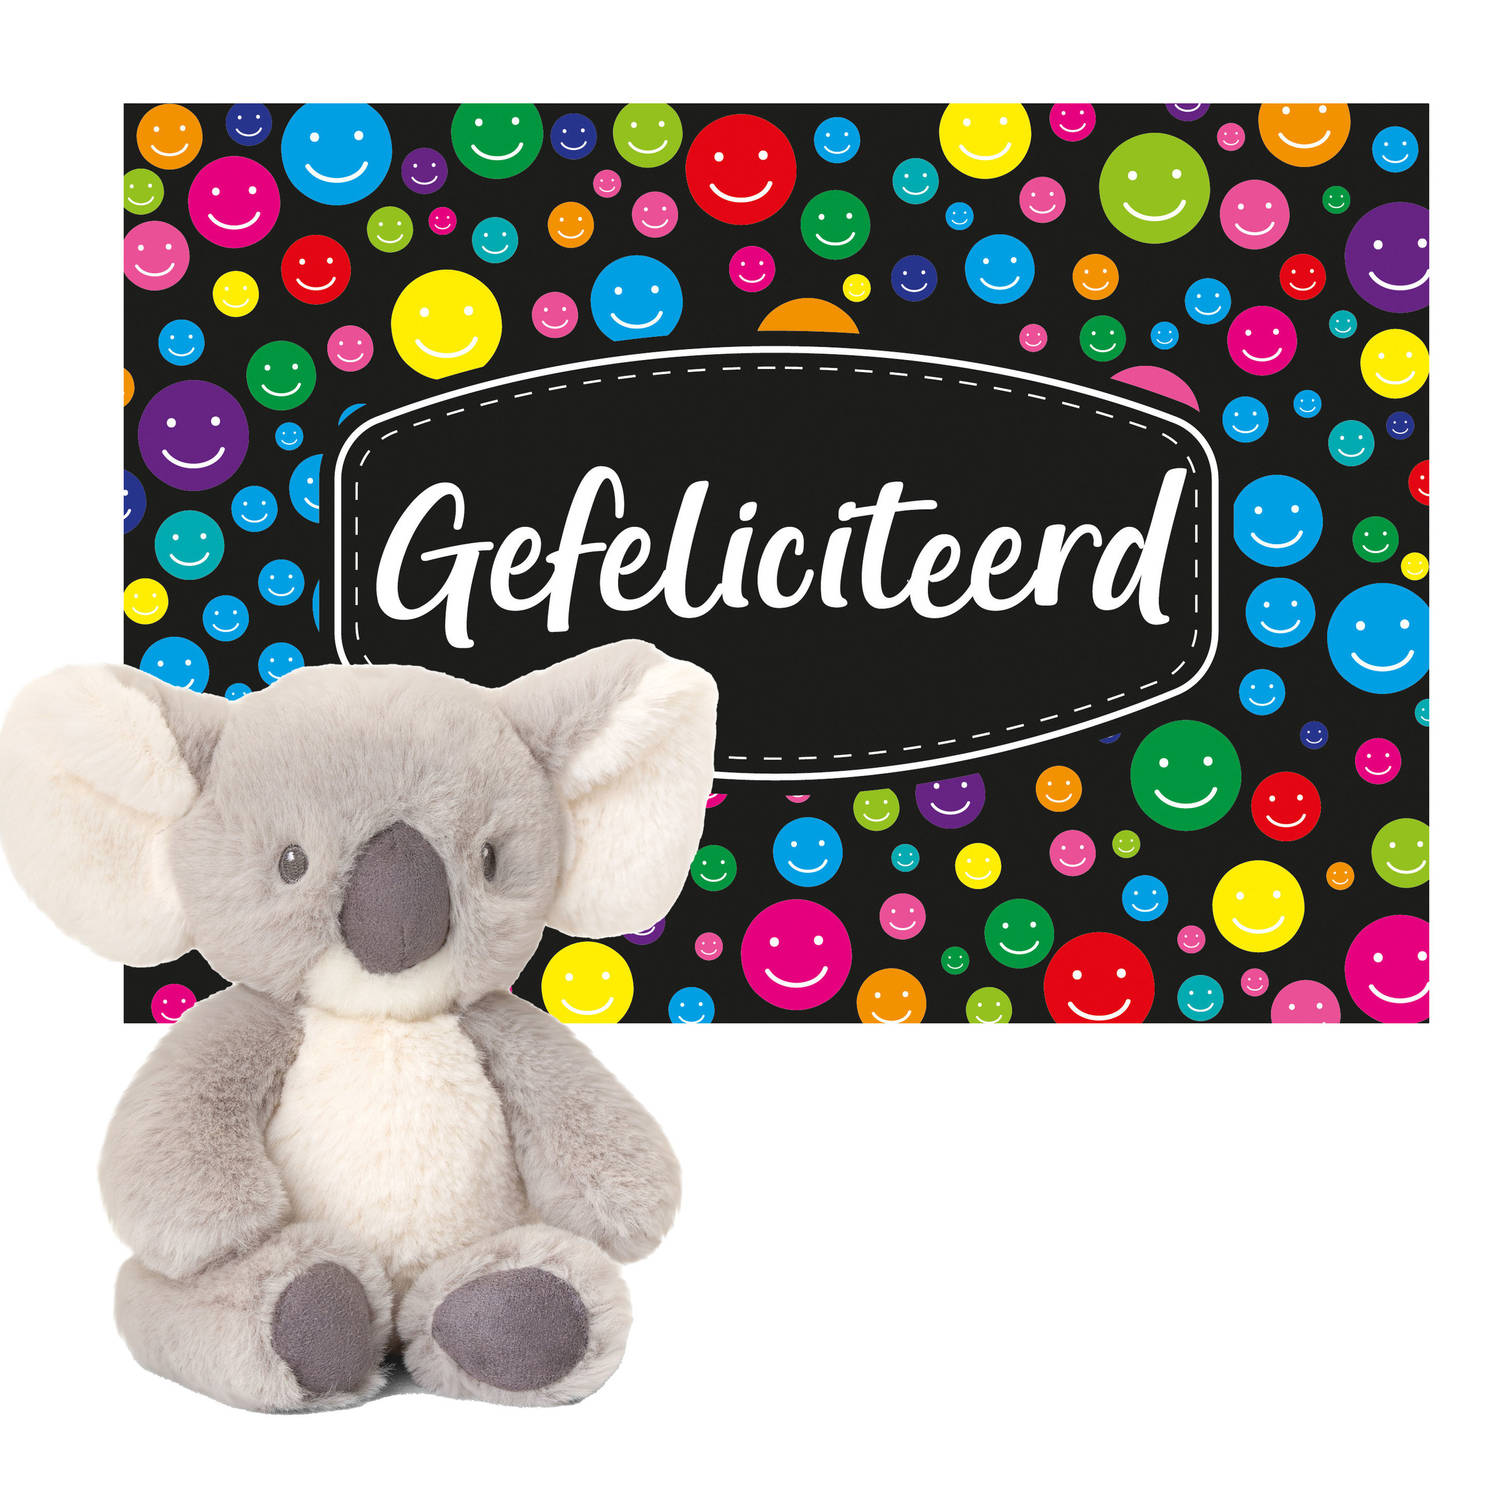 Keel toys Cadeaukaart Gefeliciteerd met knuffeldier koala 14 cm Knuffeldier